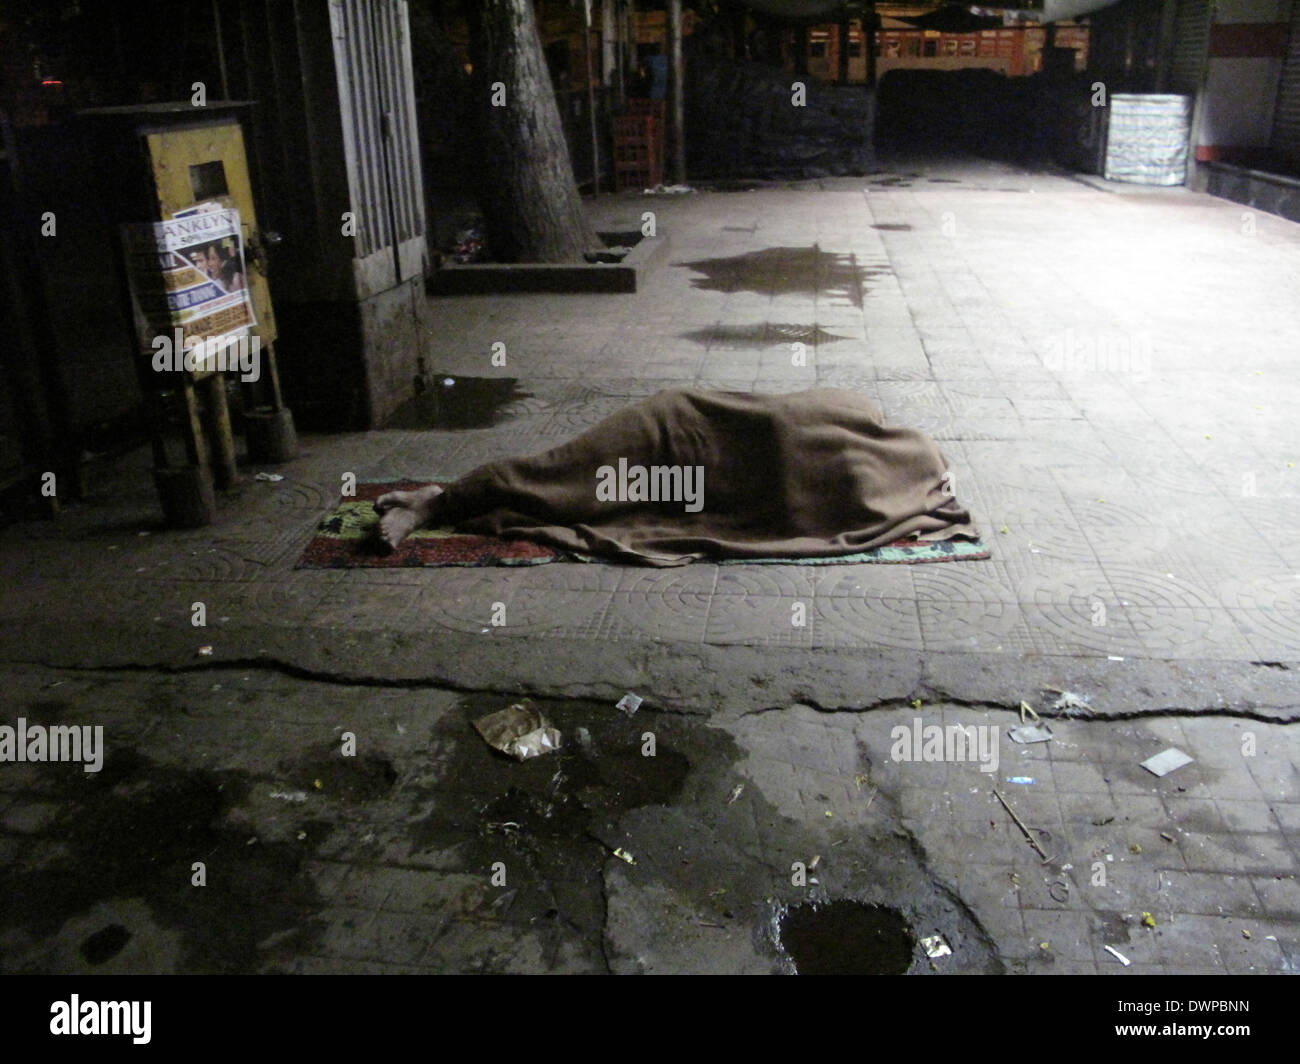 Streets of Kolkata, man sleeping on the streets of Kolkata,India on January 30, 2009. Stock Photo